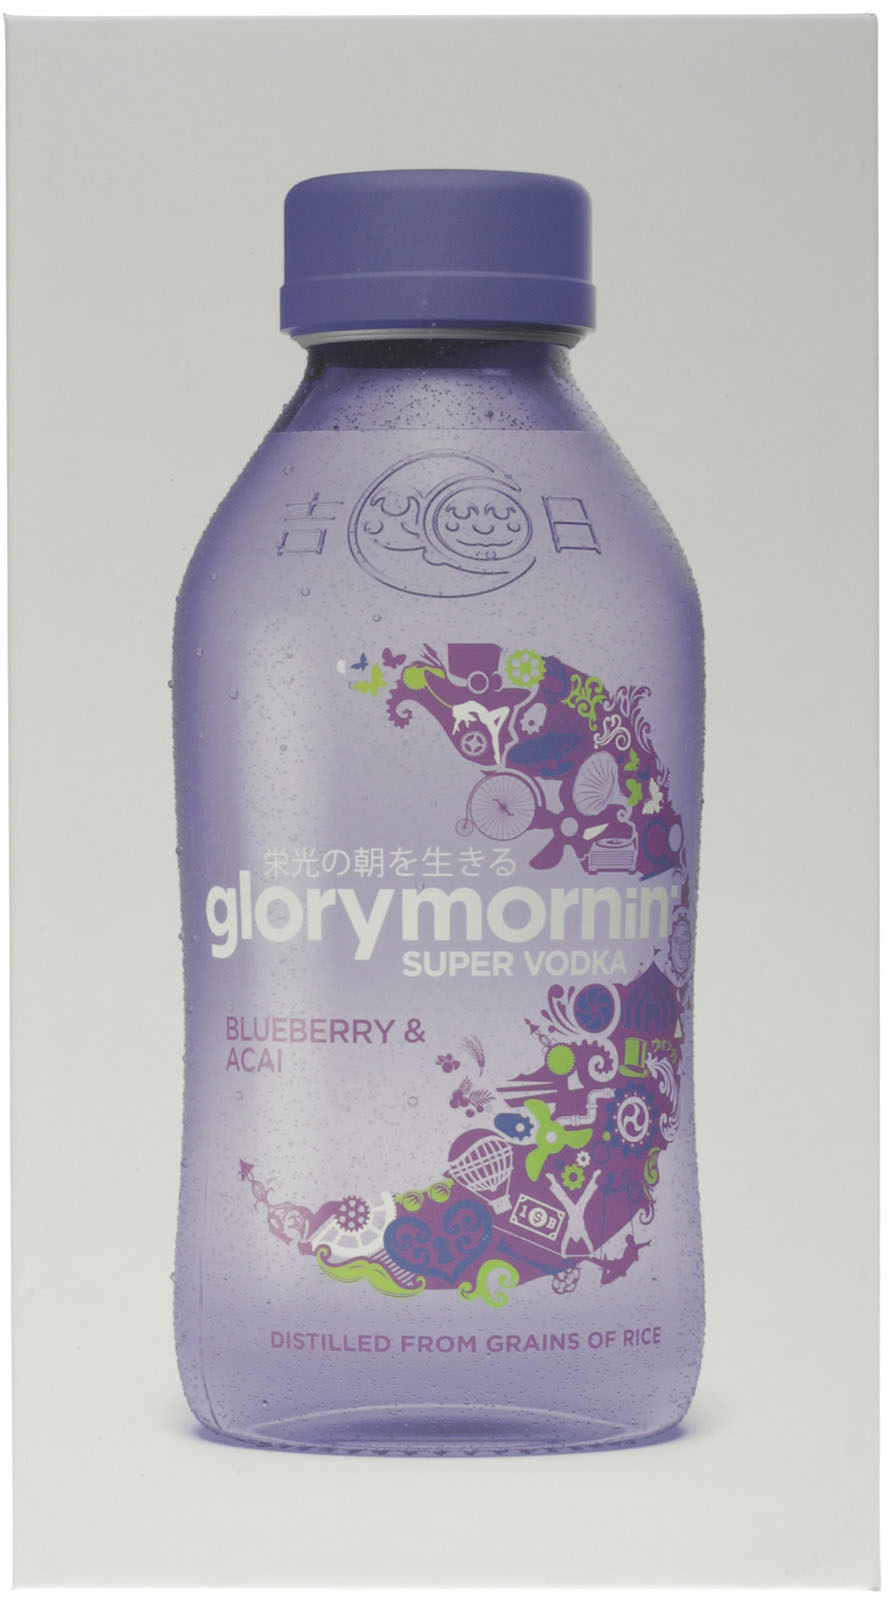 Glory Mornin - Vodka Shop im & Super Blueberry Acai